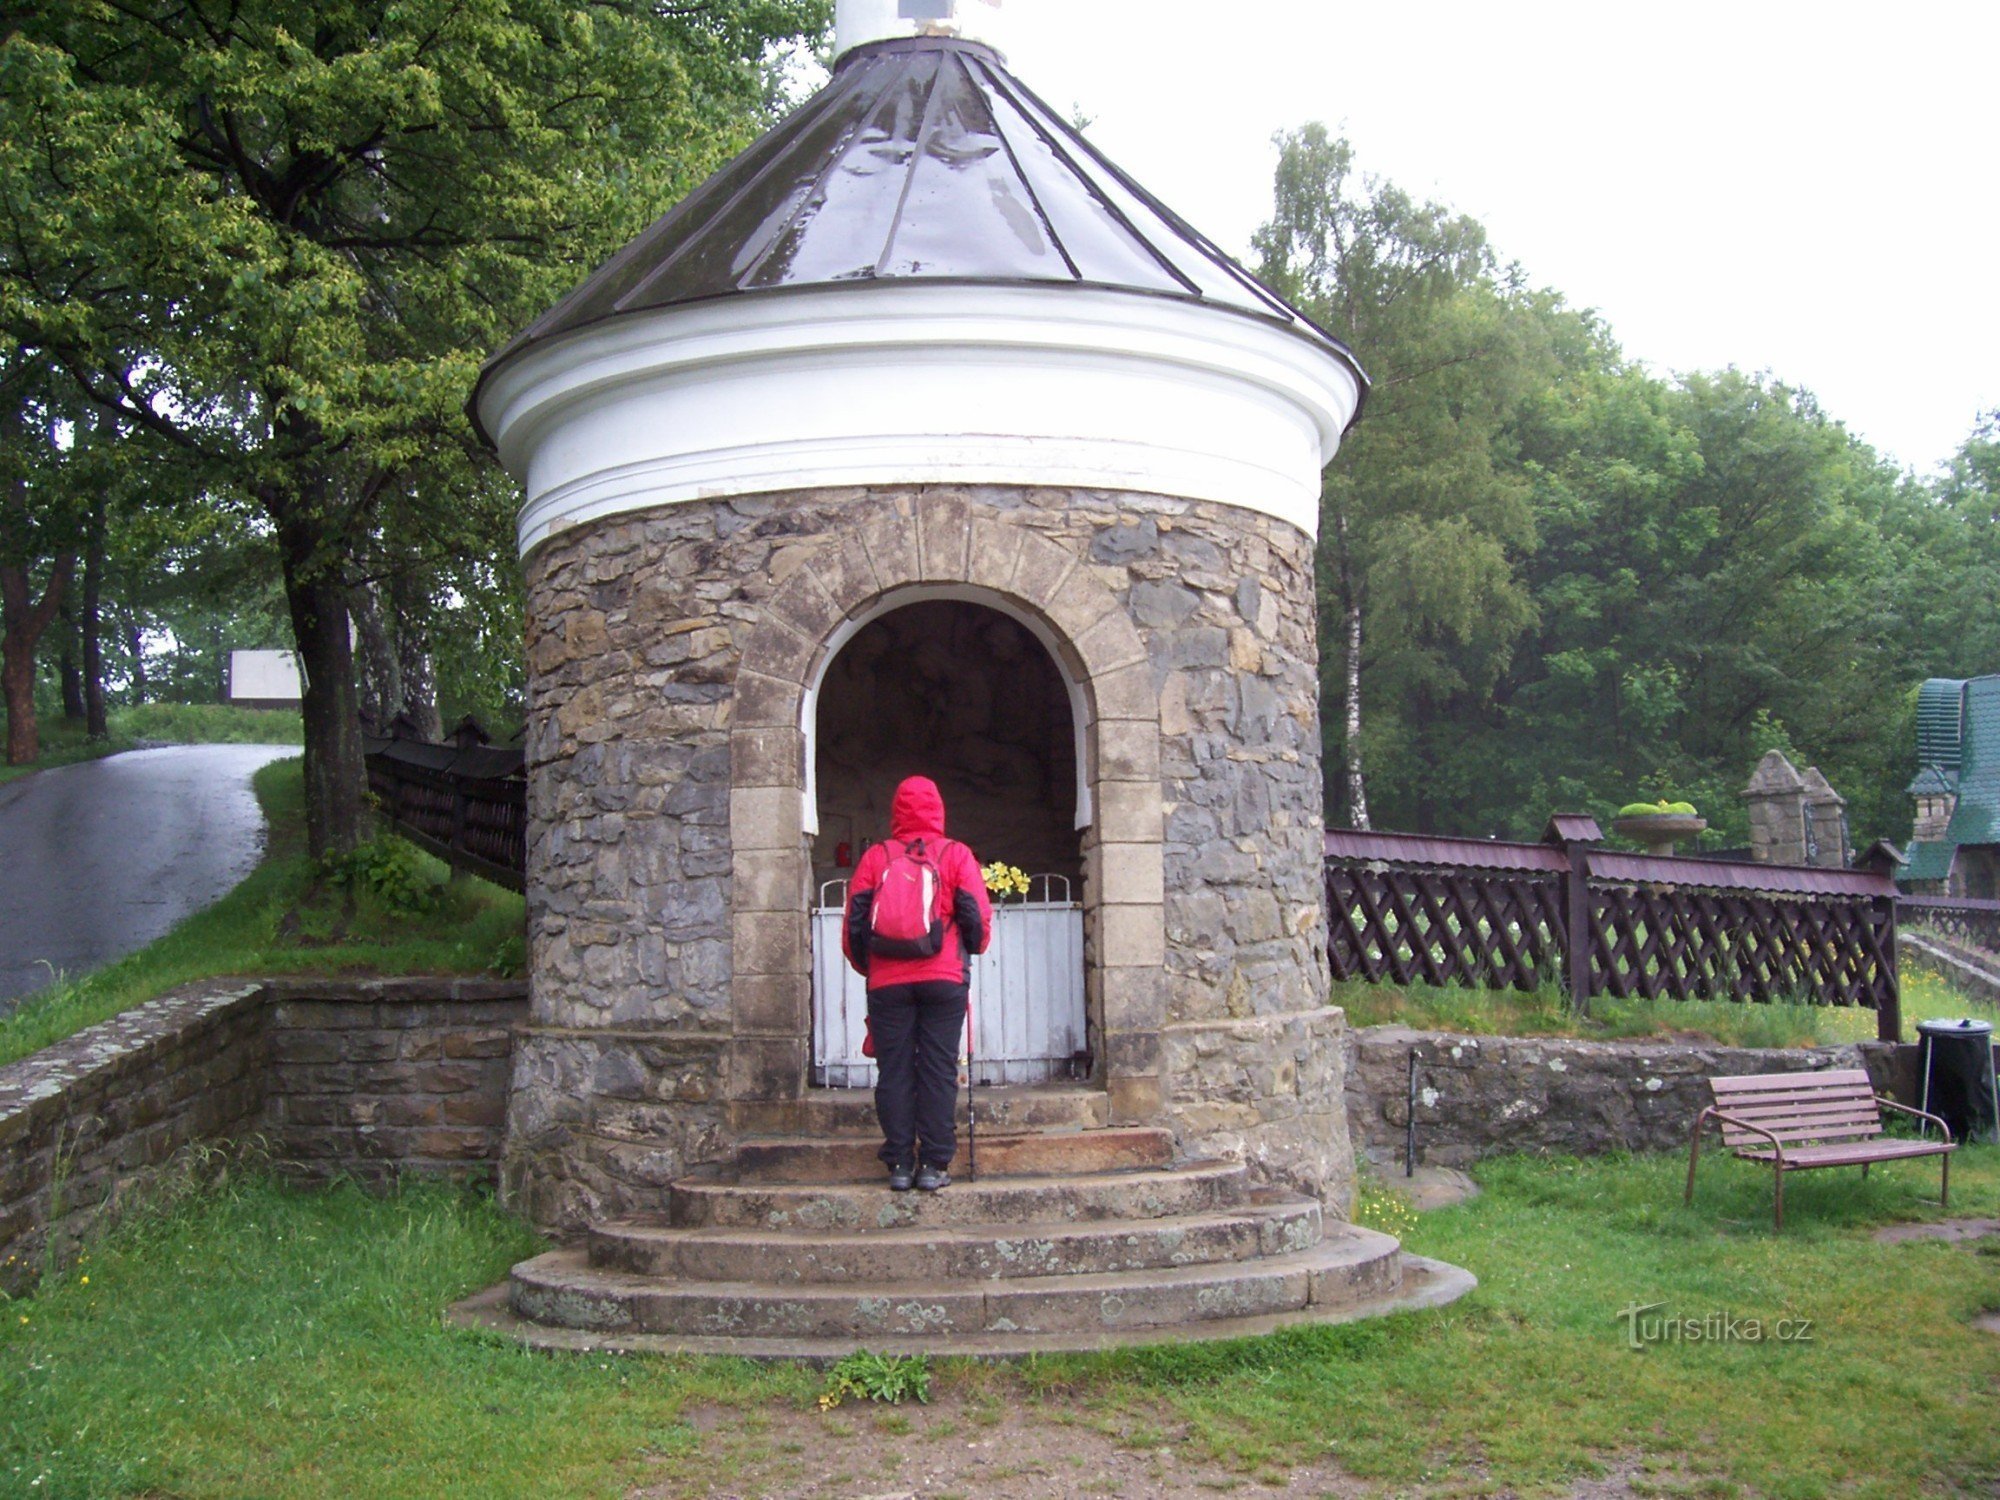 Hostýn-kapel på bjergkirkegården